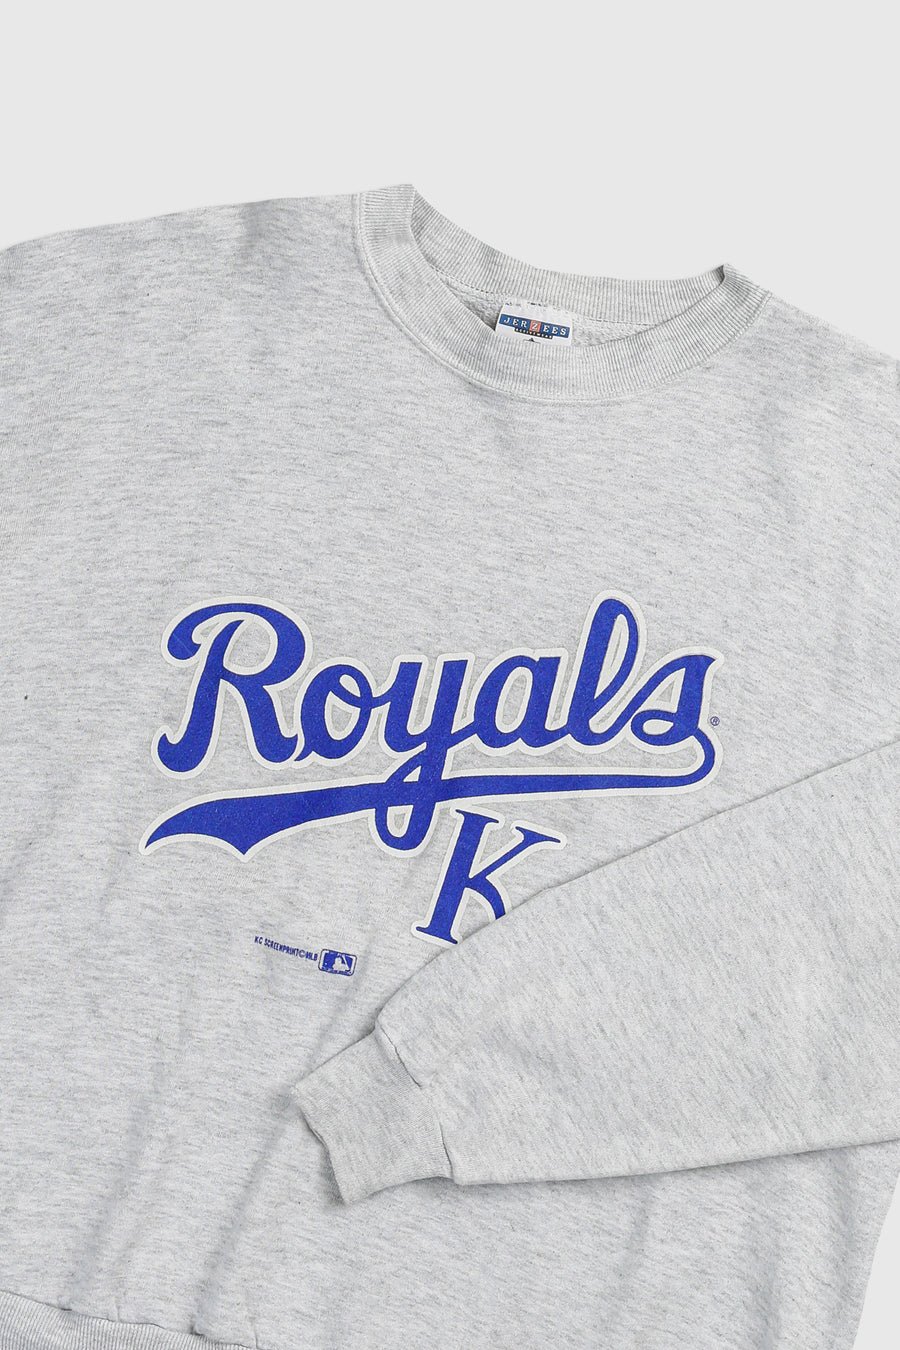 Vintage Kansas City Royals MLB Sweatshirt - XL